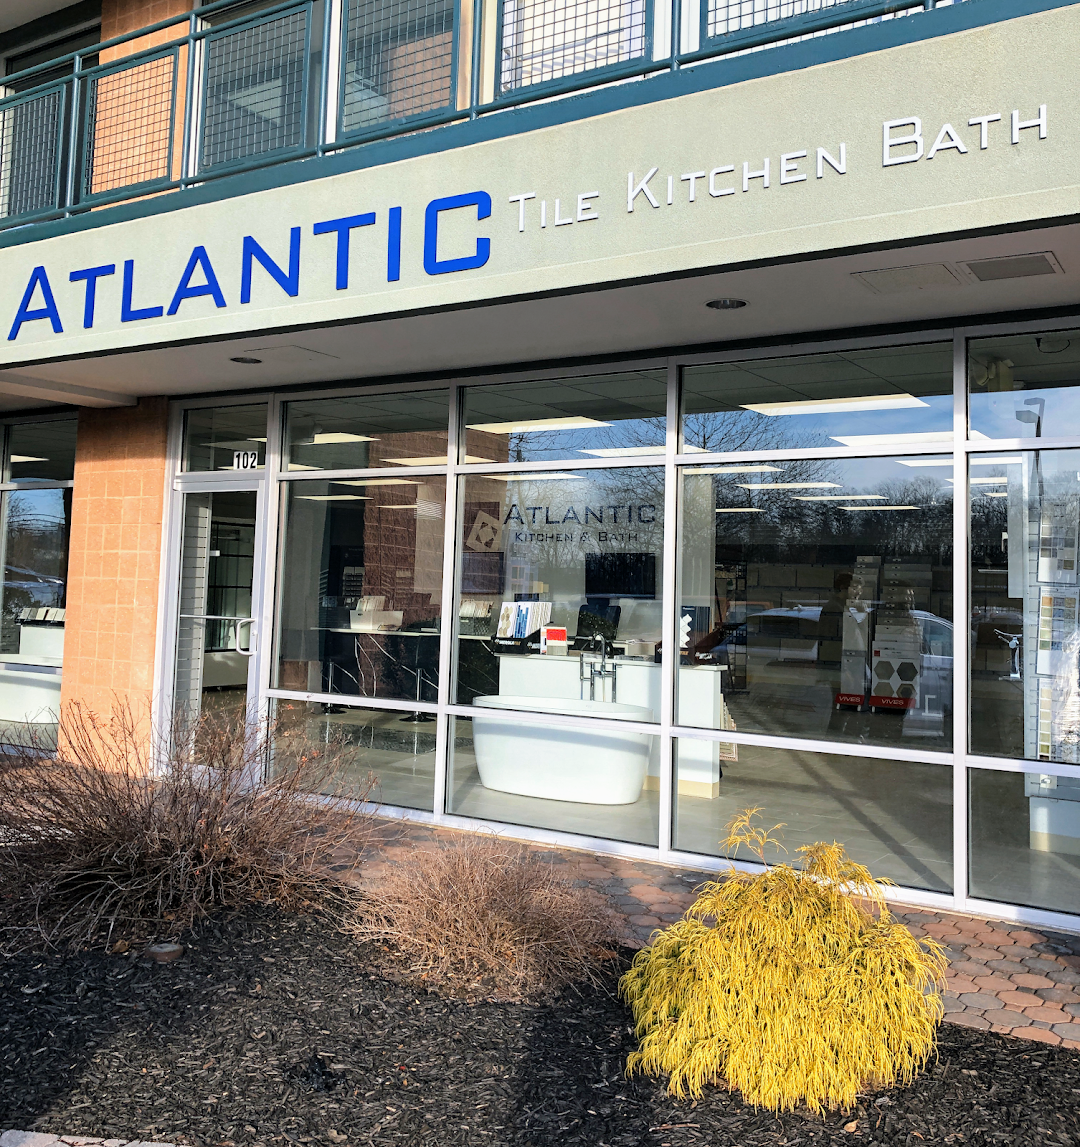 Atlantic Tile, Kitchen and Bath Design Center